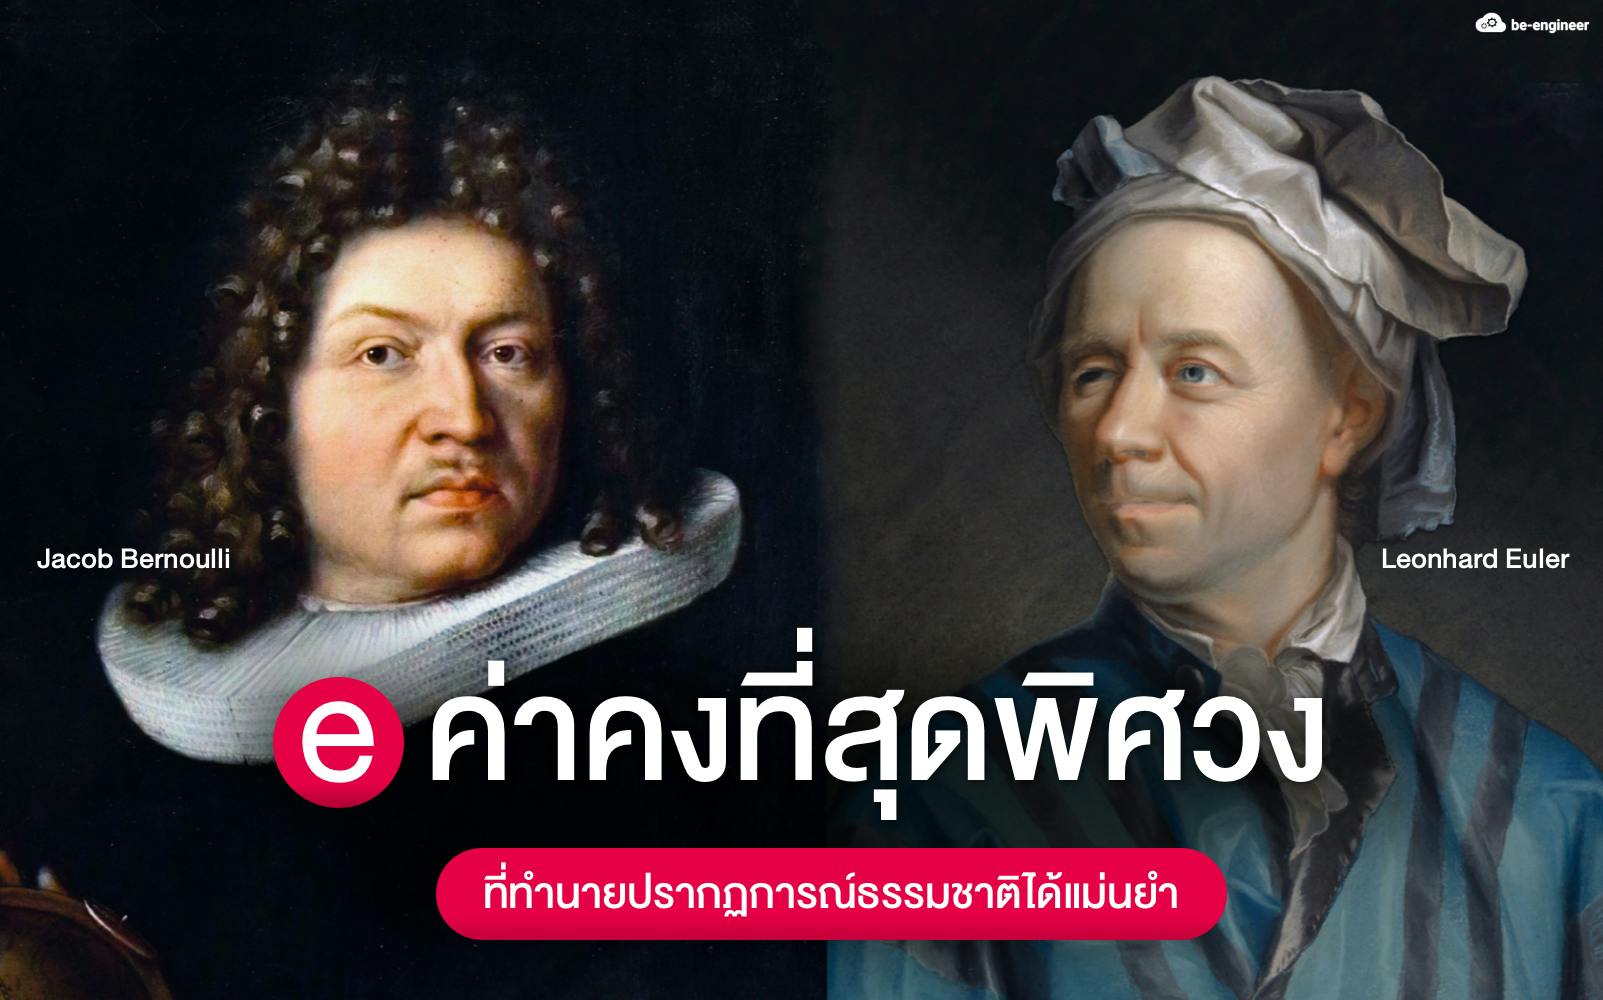 Jacob Bernoulli and Leonard Euler